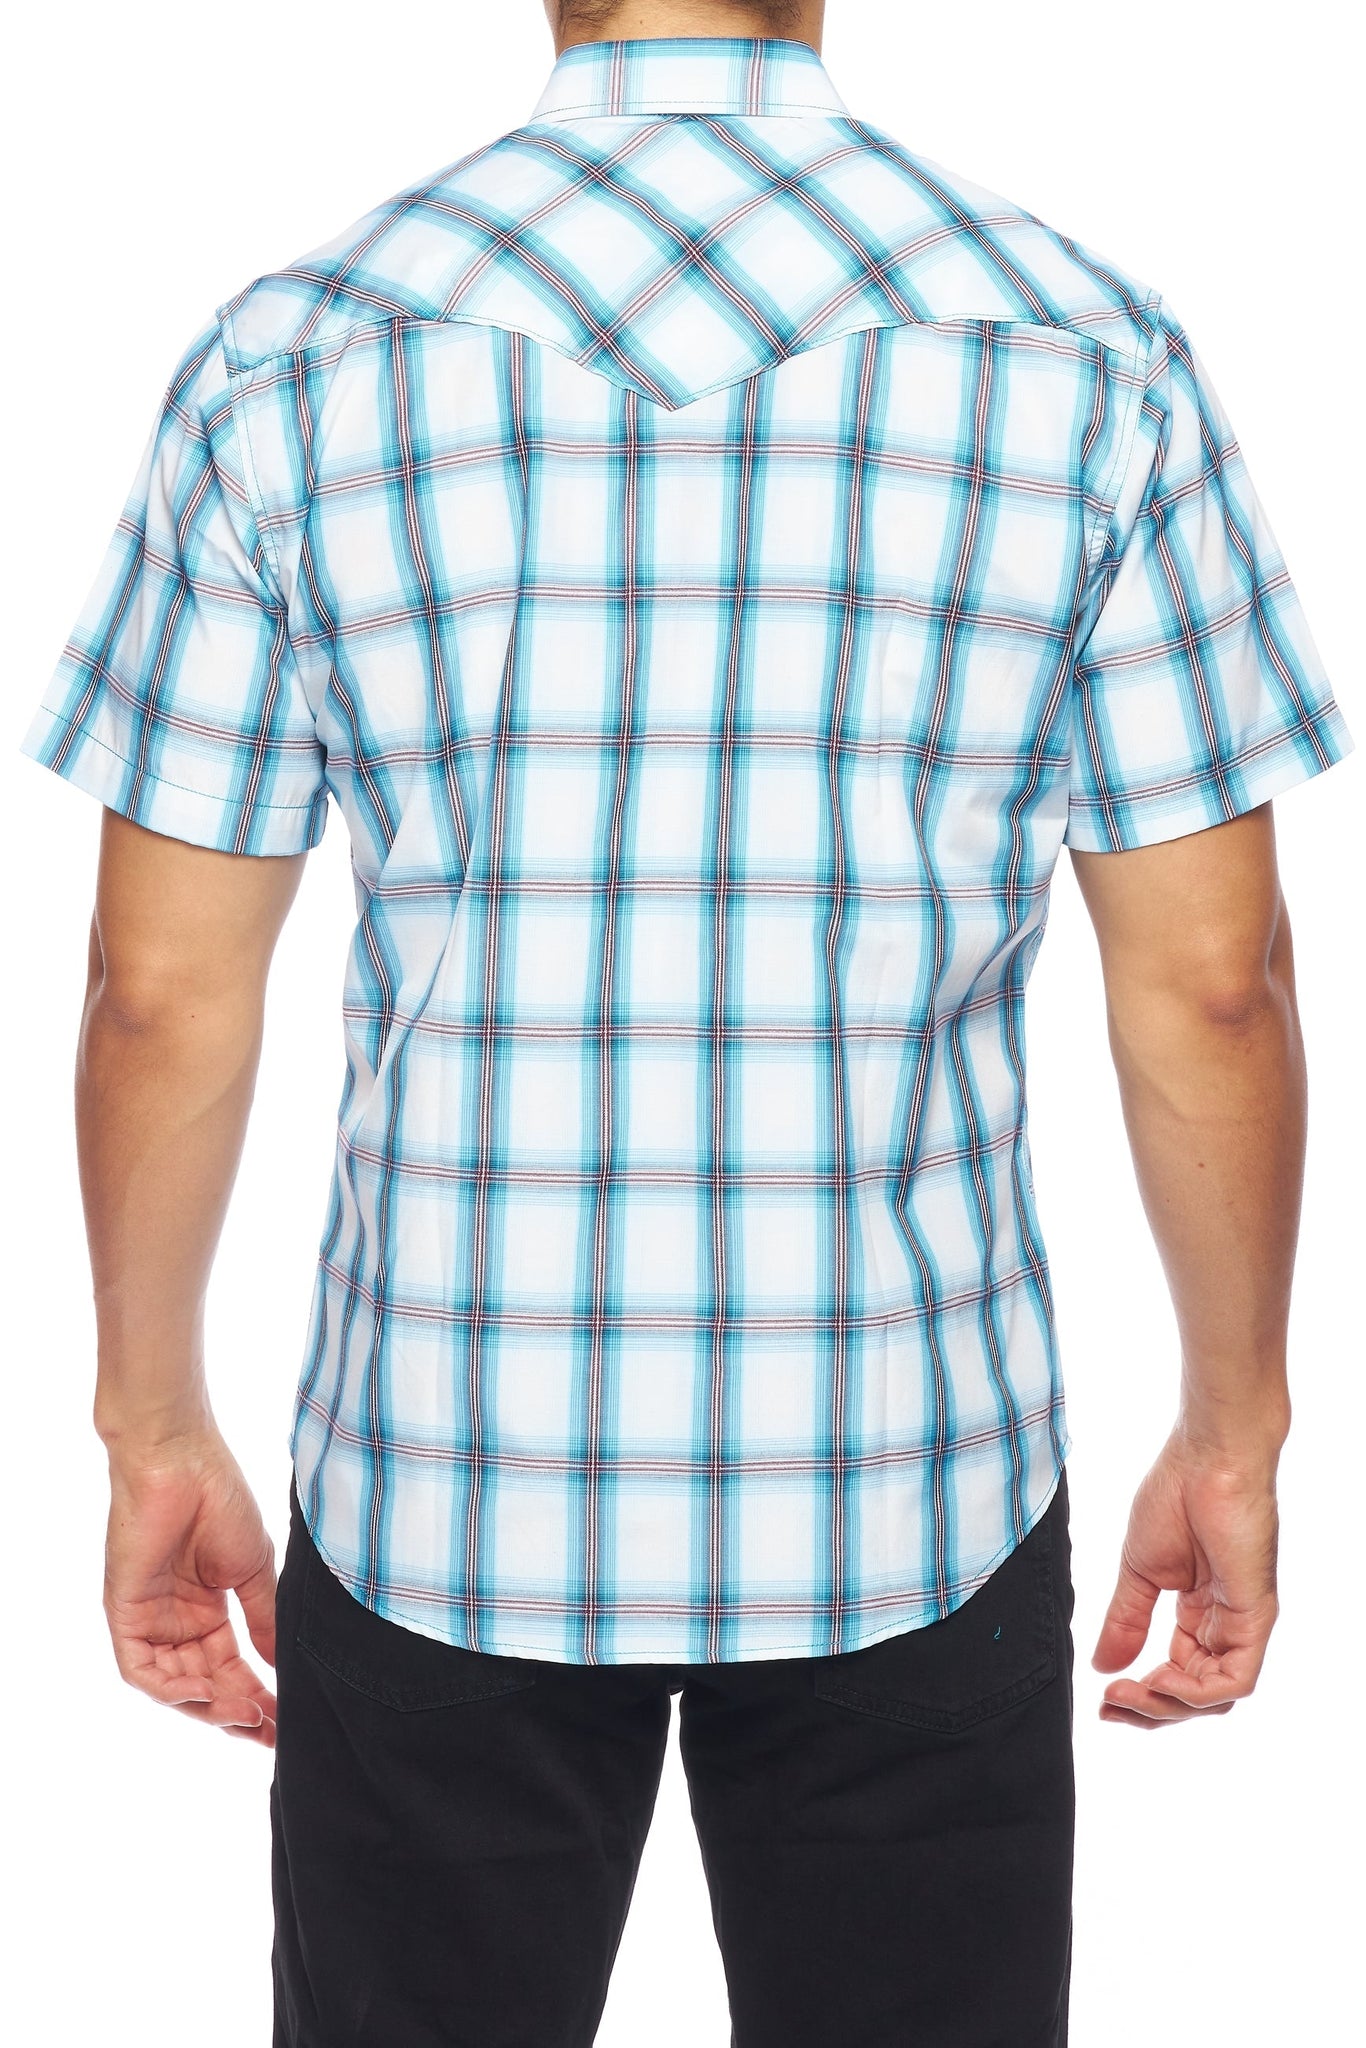 Men's Western Short Sleeve Pearl Snaps Plaid Shirt -PS400S-410